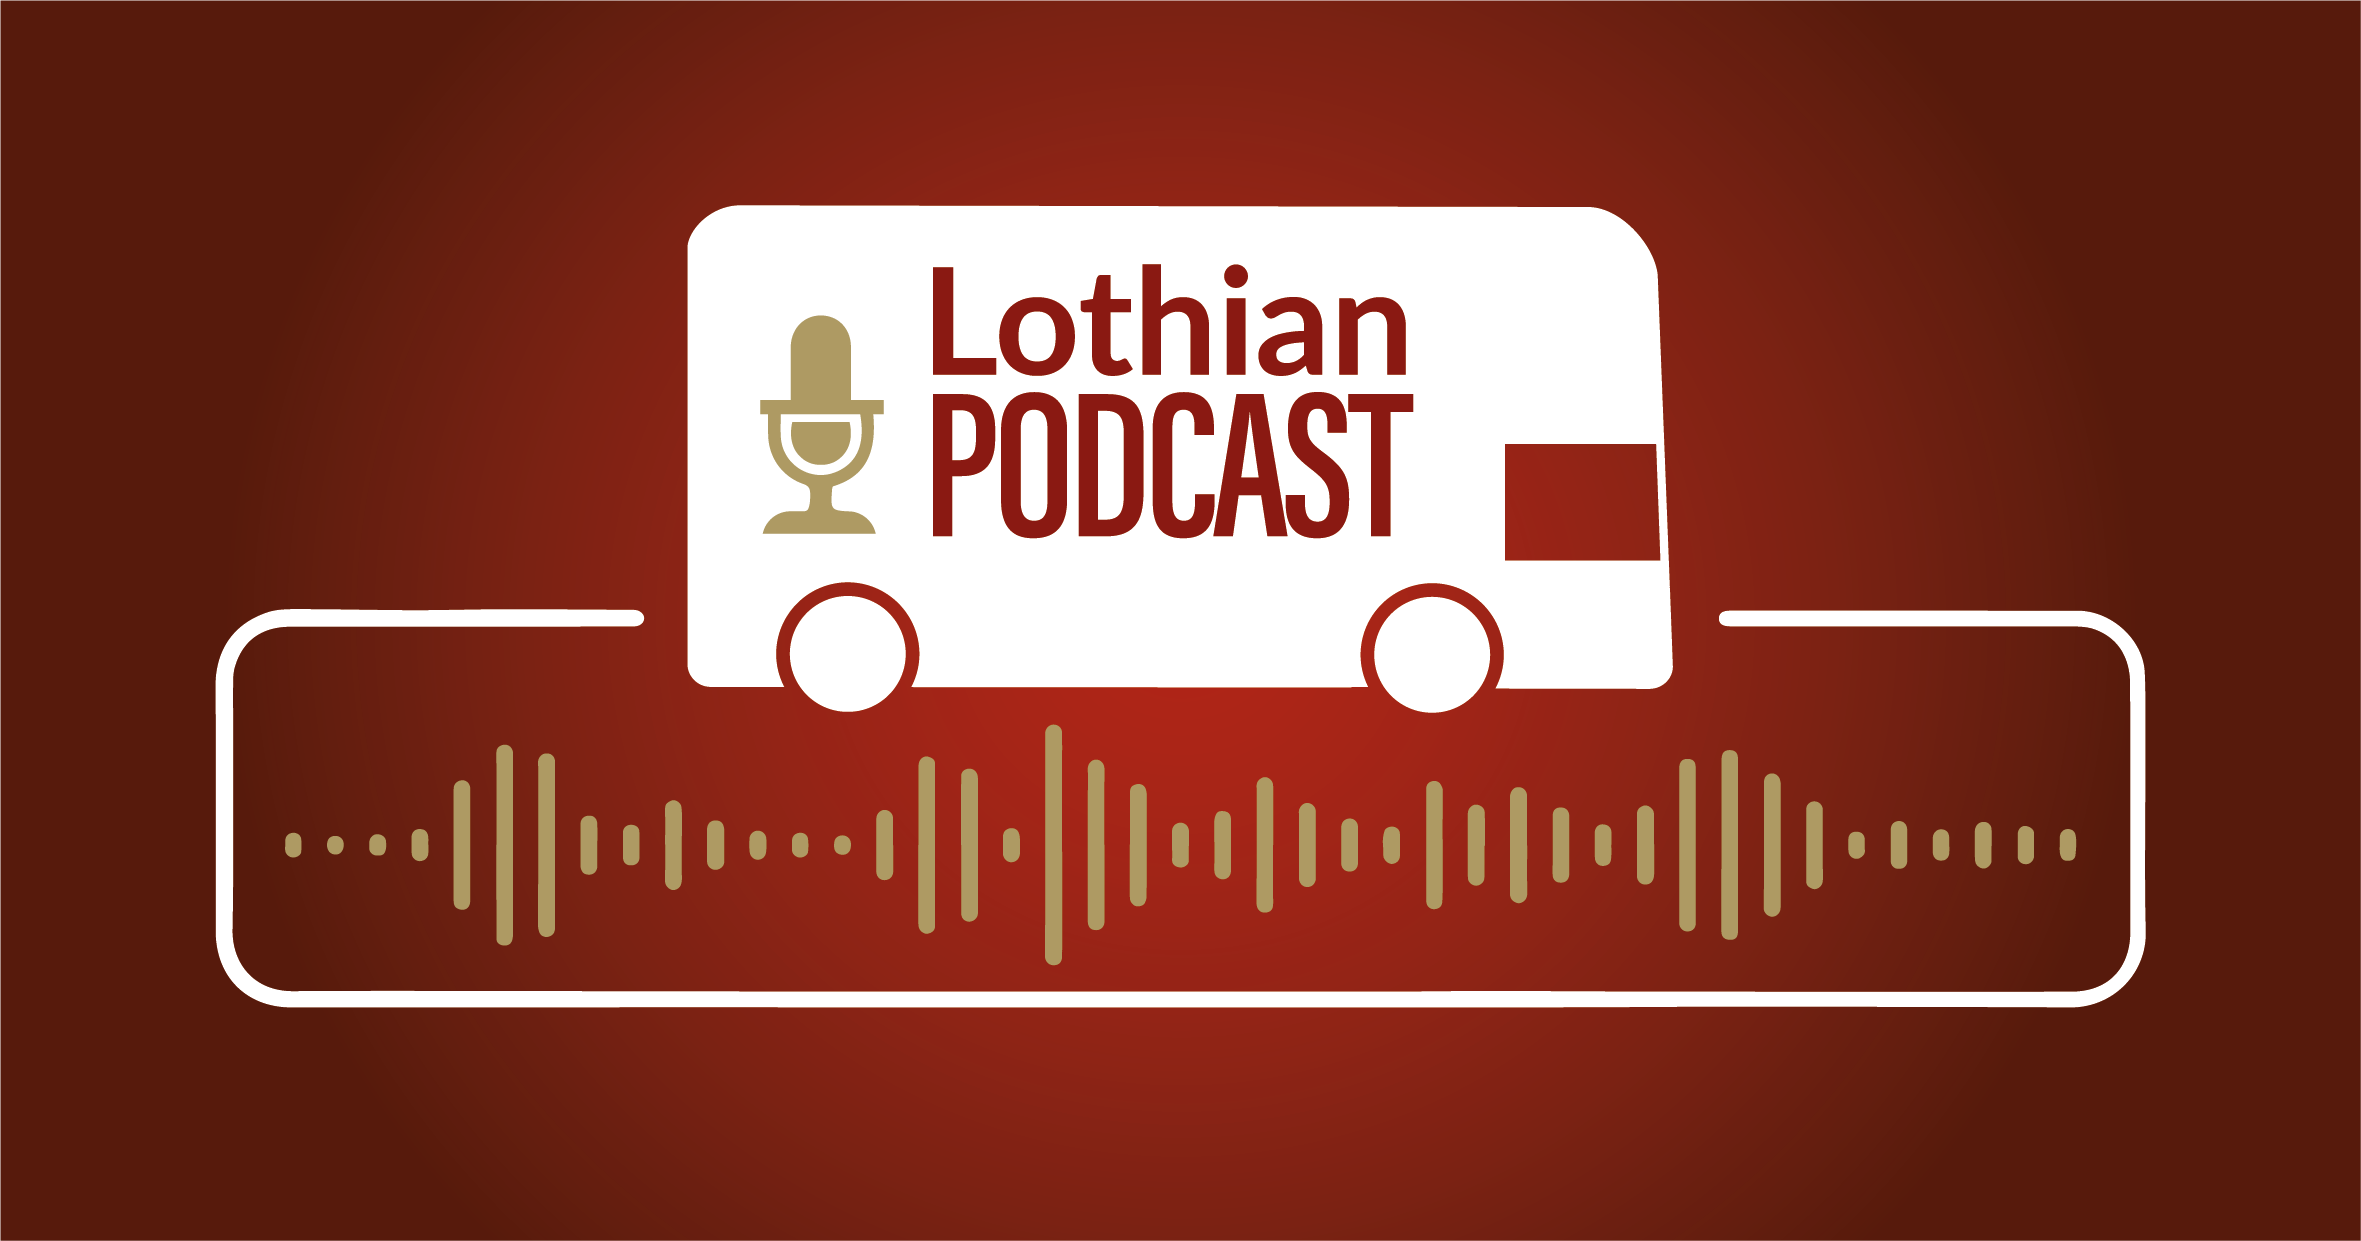 Lothian Podcast – Episode 018 – Special Episode